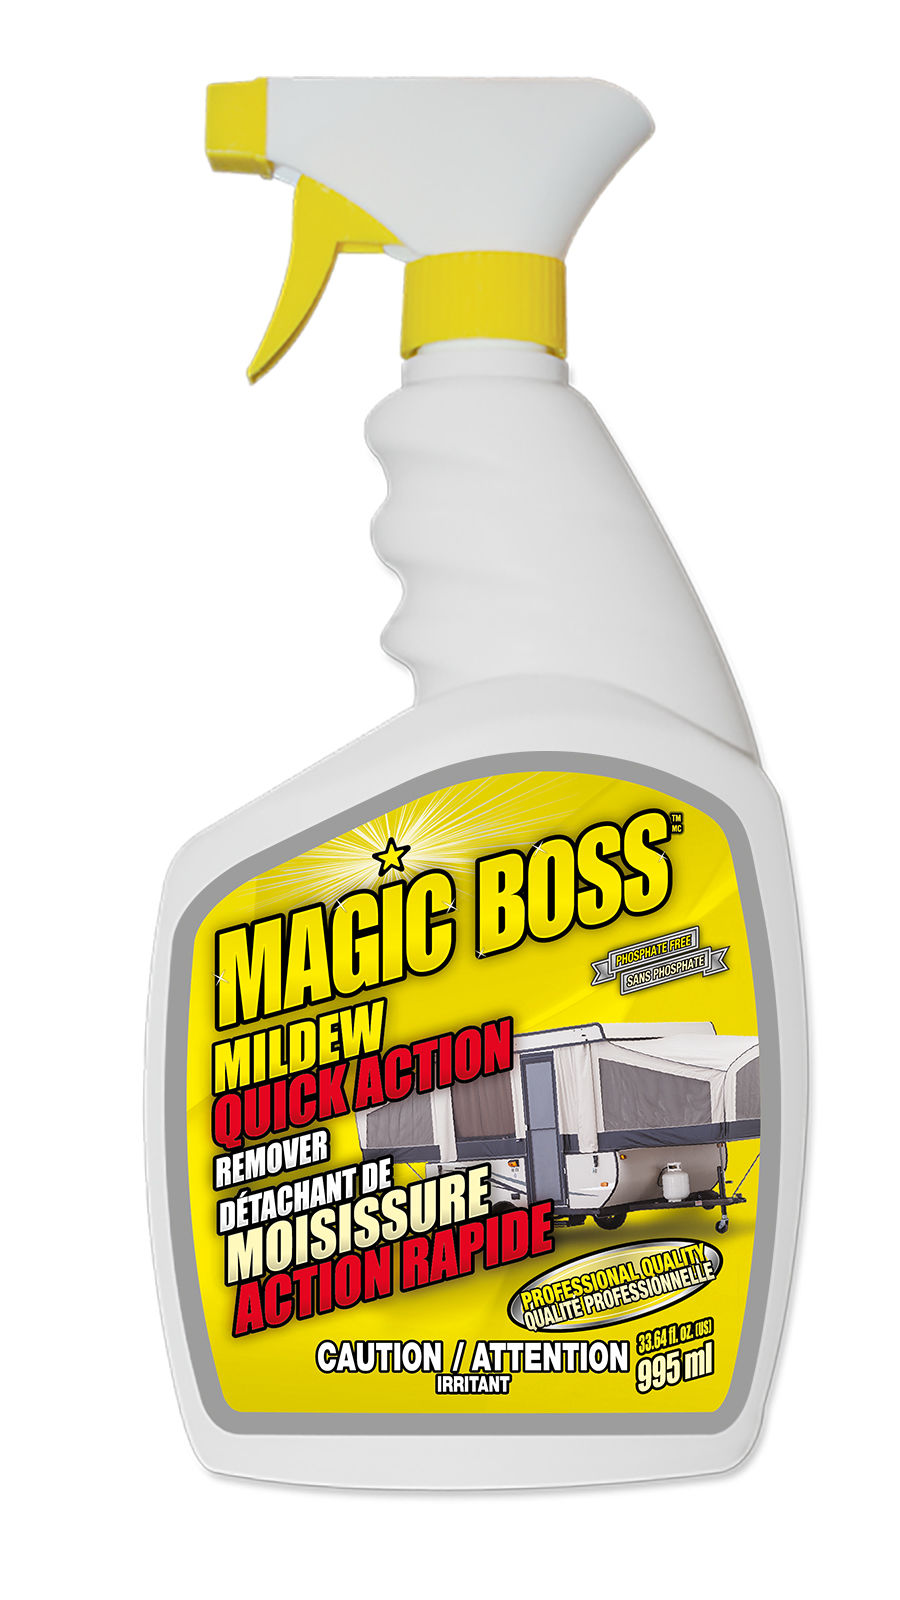 Magic Boss 2100 - Box of 12, Mildew Quick Action Remover (995 ml)